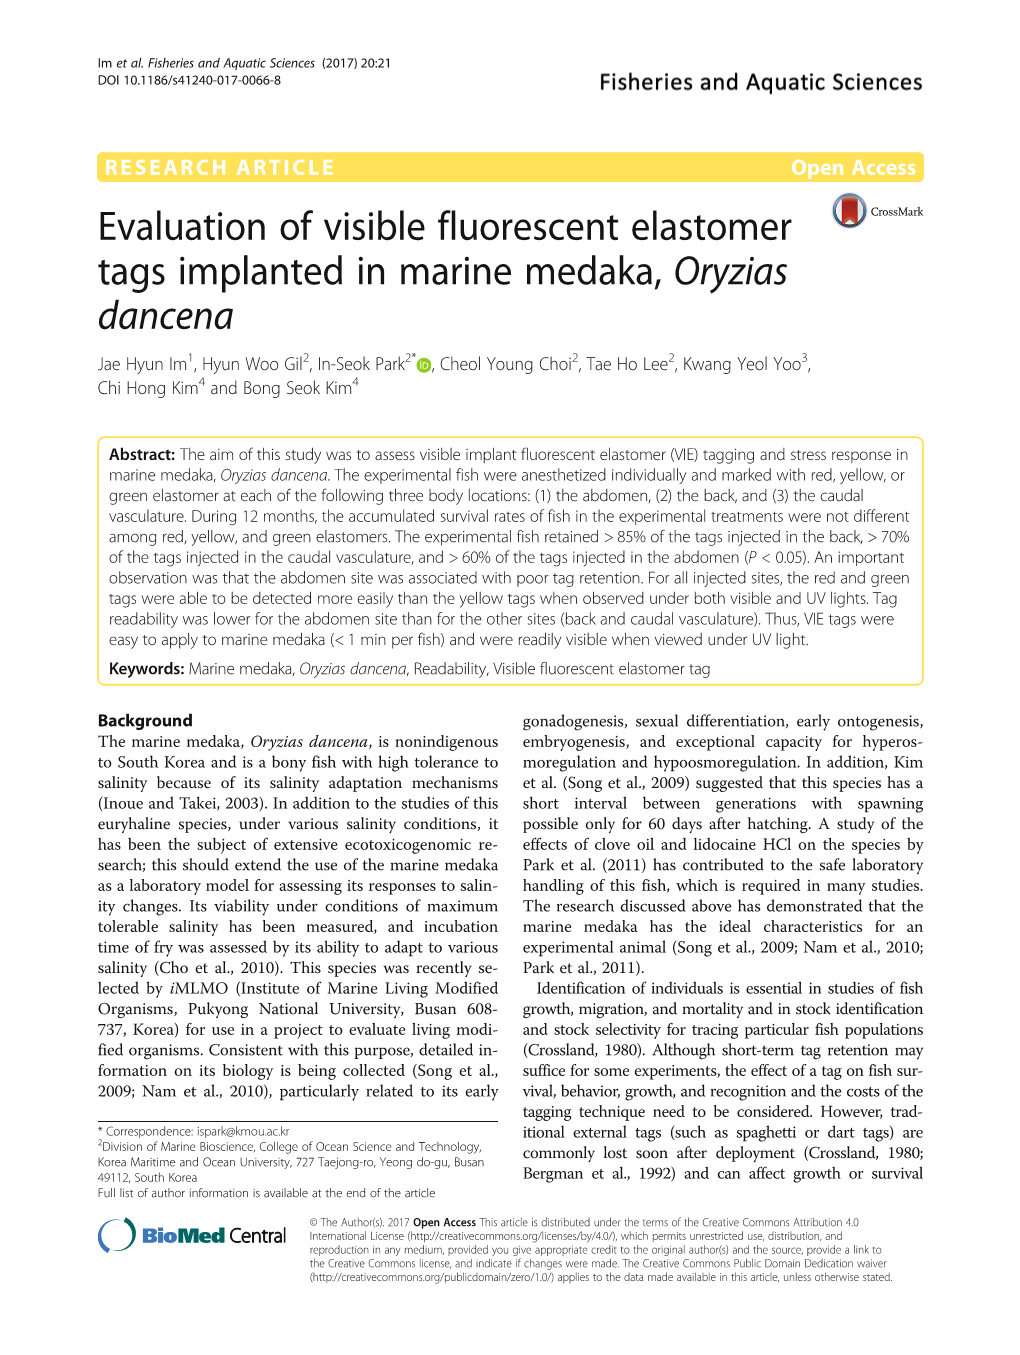 Evaluation of Visible Fluorescent Elastomer Tags Implanted in Marine Medaka, Oryzias Dancena